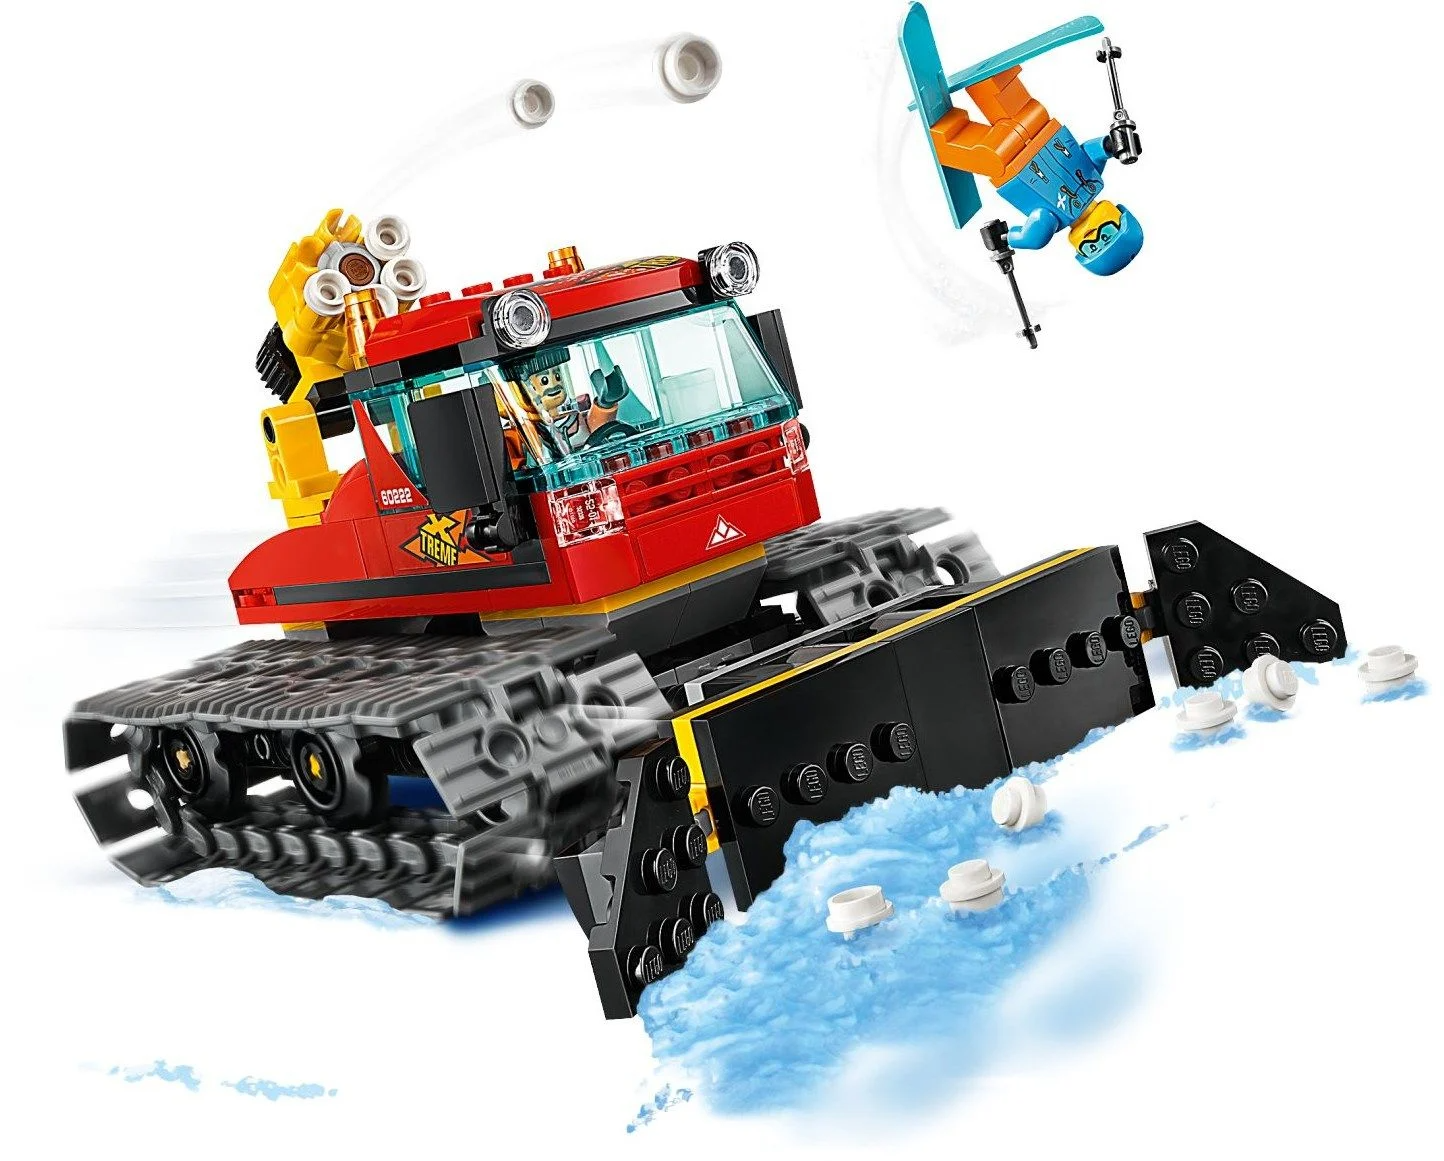 LEGO City Snow Groomer